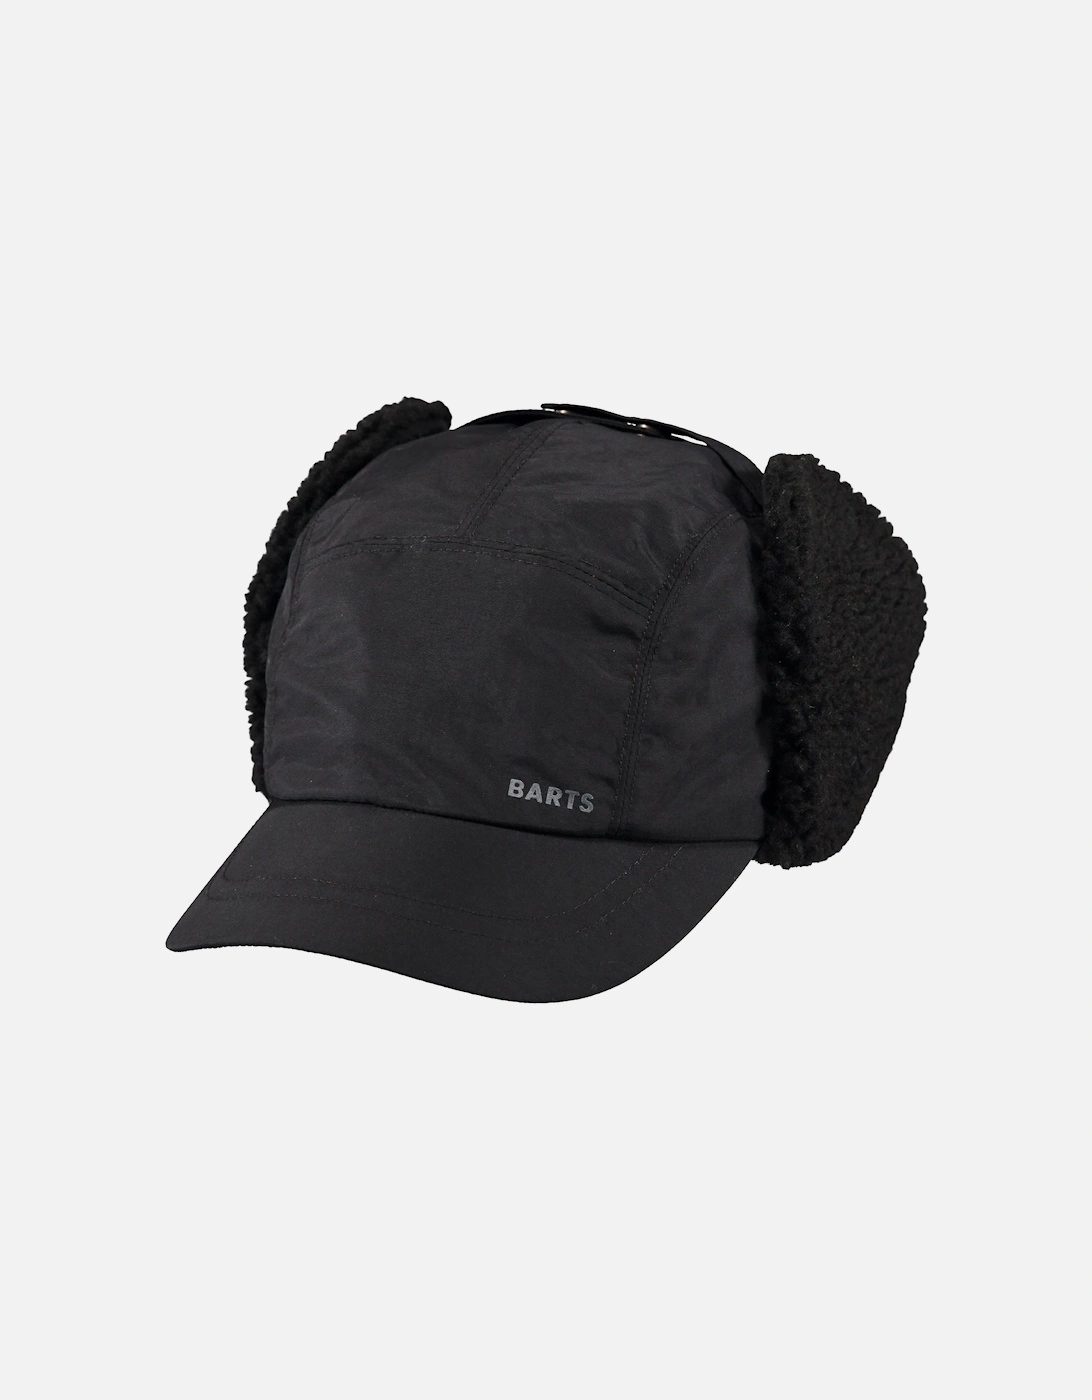 Mens Boise Fleece Lined Cap Hat With Ear Flaps